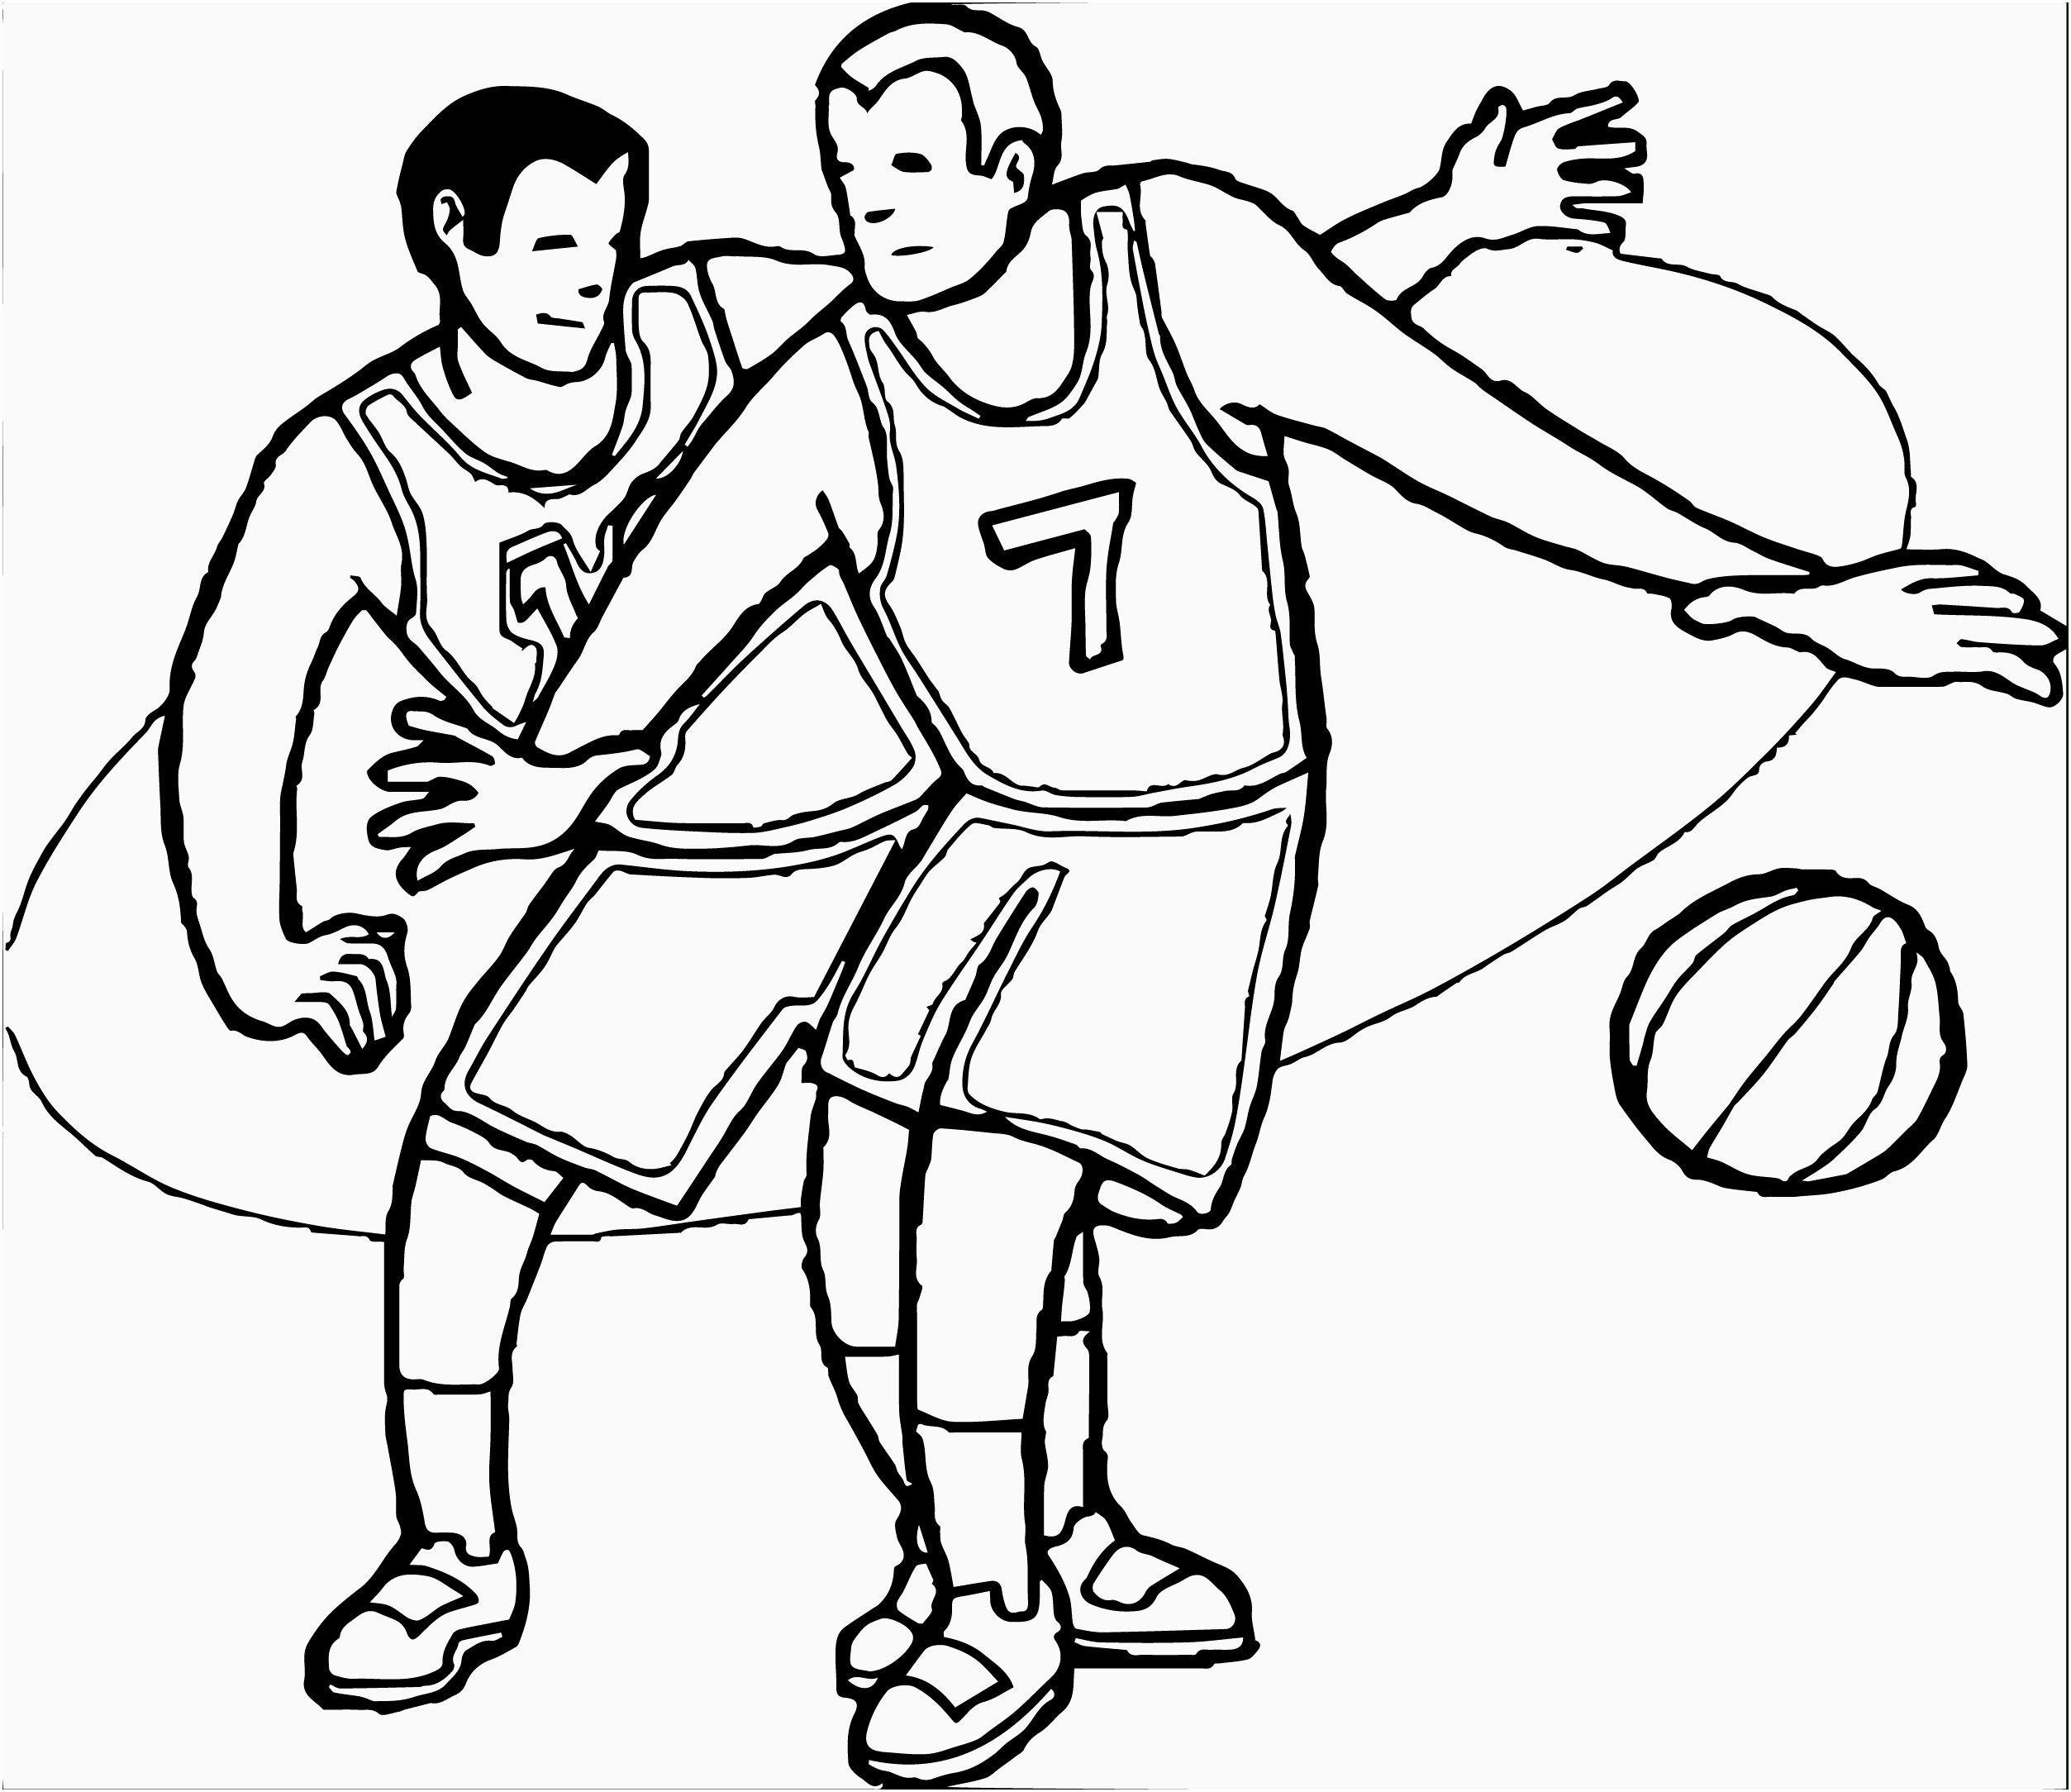 Basketball player drawing.